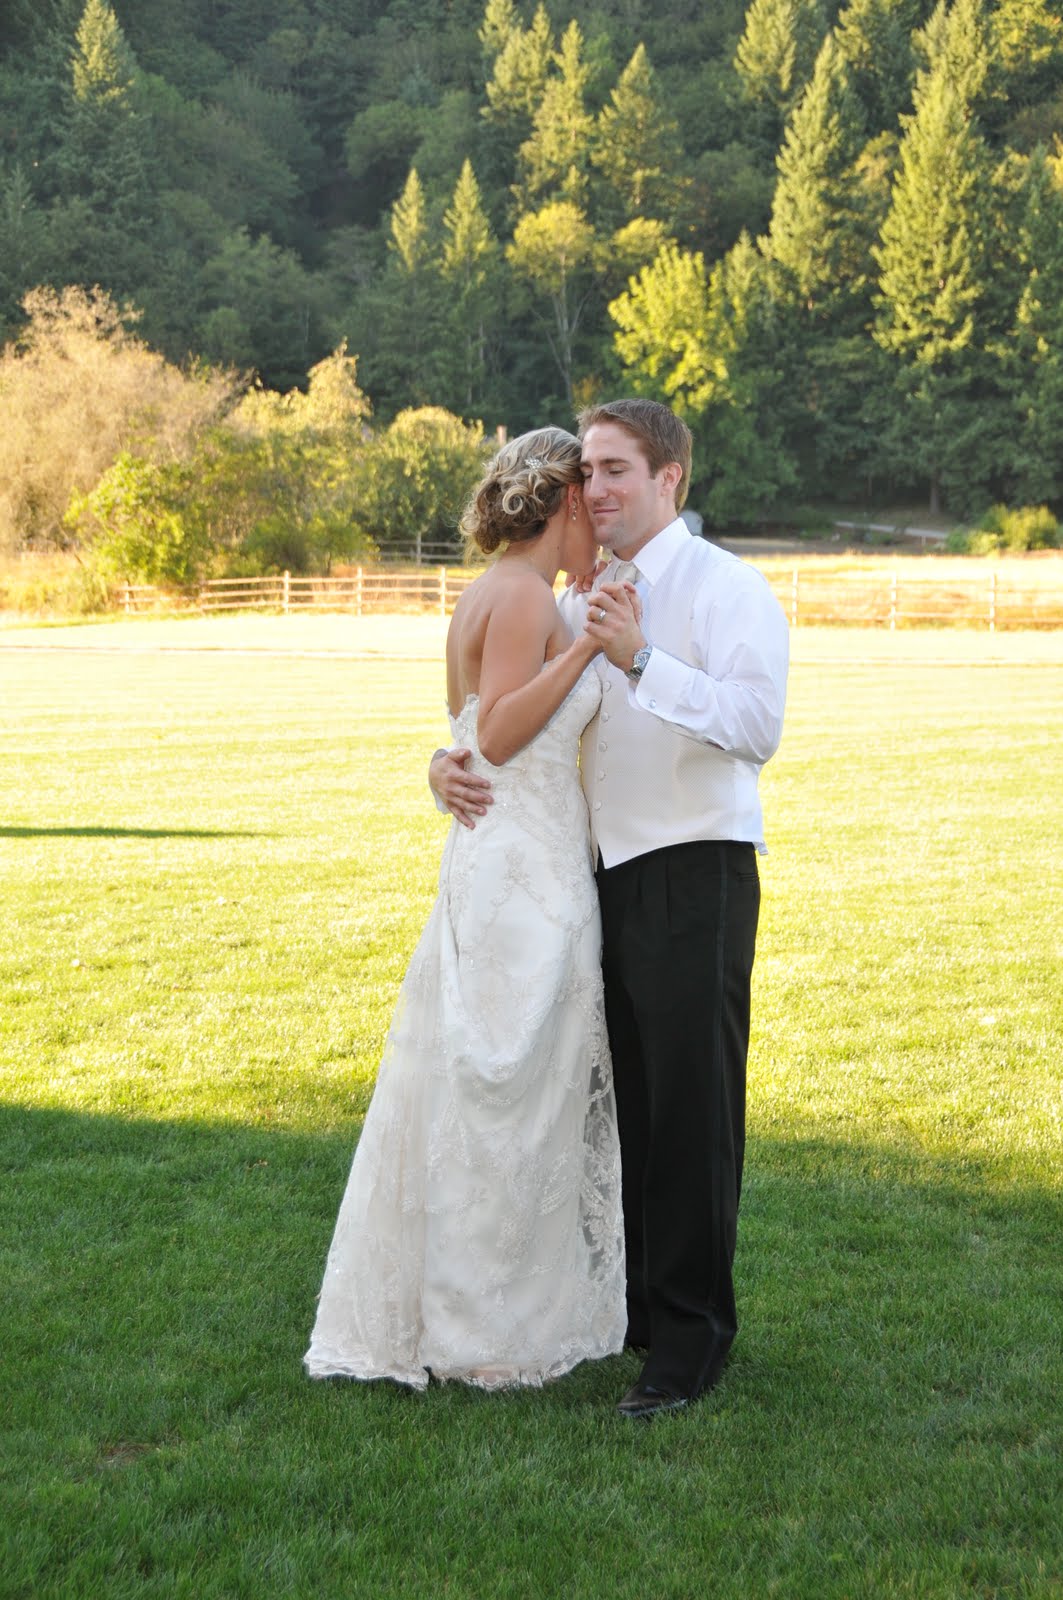 Amy Brant Photography: Spangler Wedding @ Pomeroy Farm